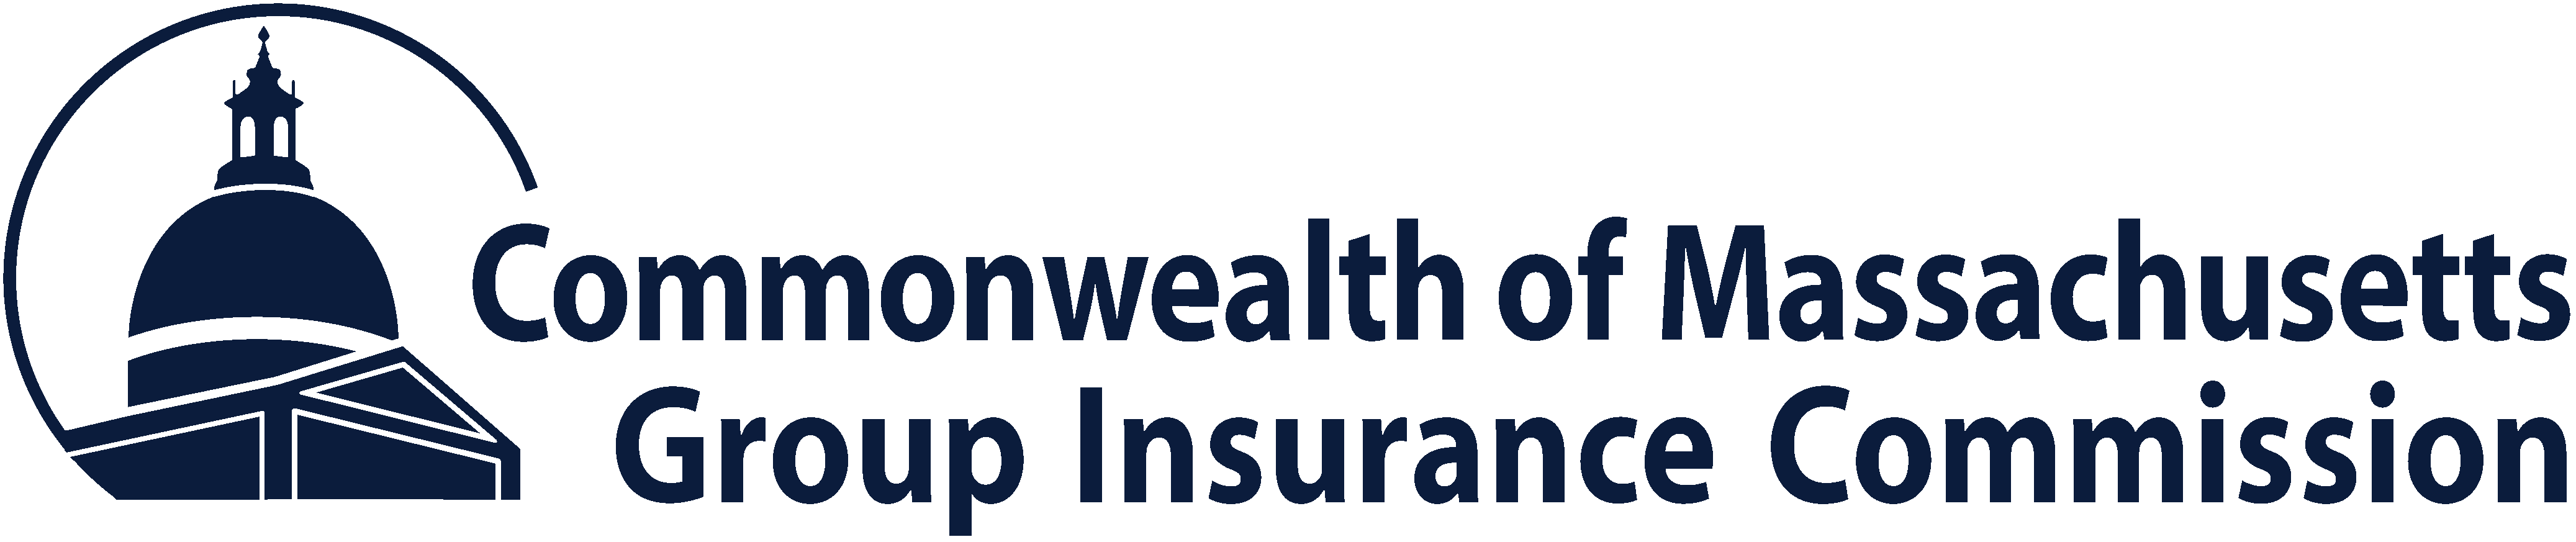 Commonwealth of Massachusetts Group Insurance Commission Logo